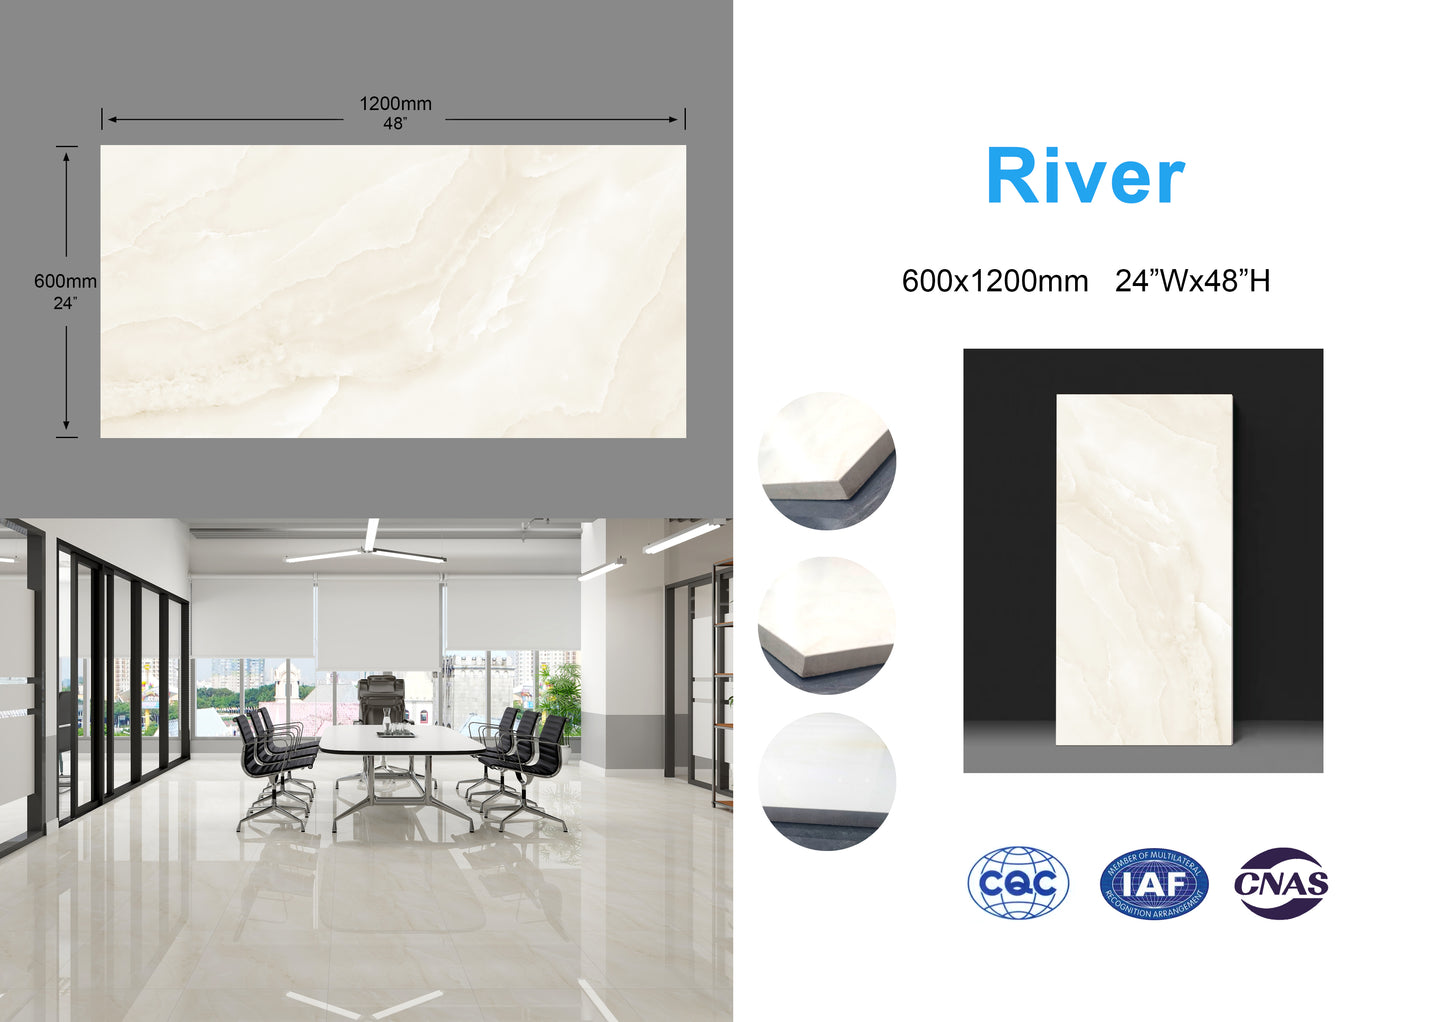 River family Full Polished Glazed Tile 24"x48" 3pcs/box 24sf/box $1.99/sf  2000sf+ $1.89/sf